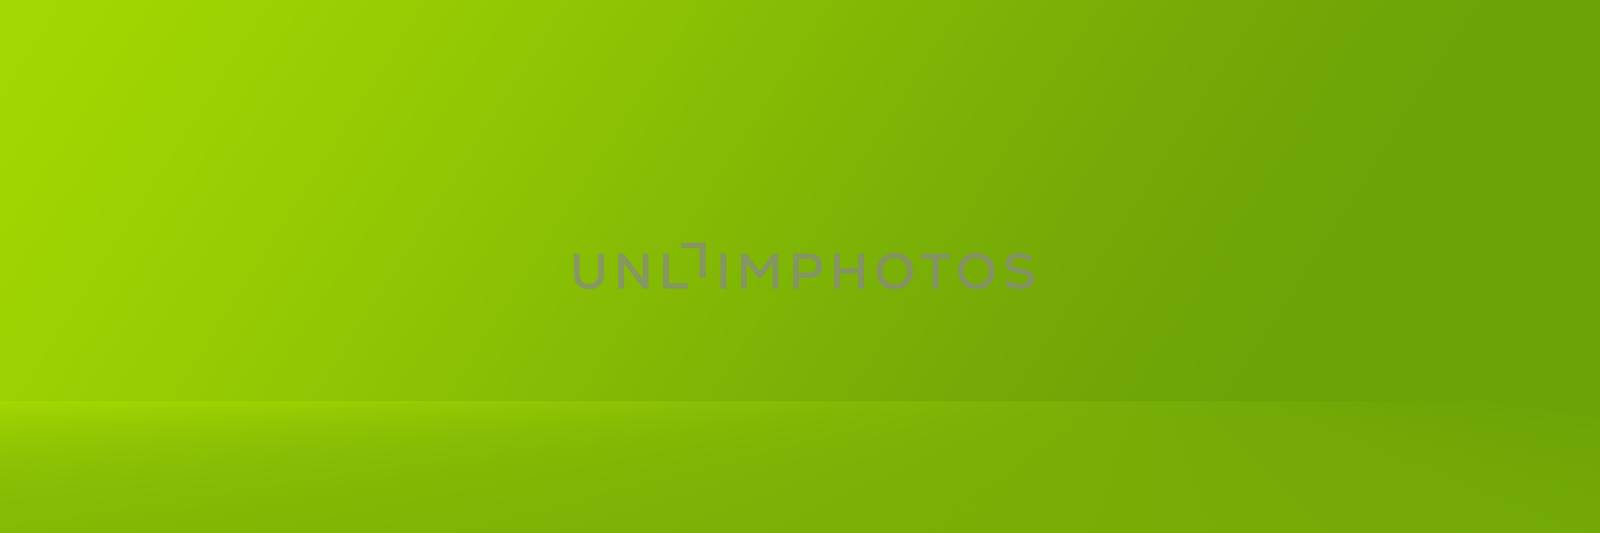 Studio Background - Bright Green Gradient horizontal studio room wall background. by Benzoix